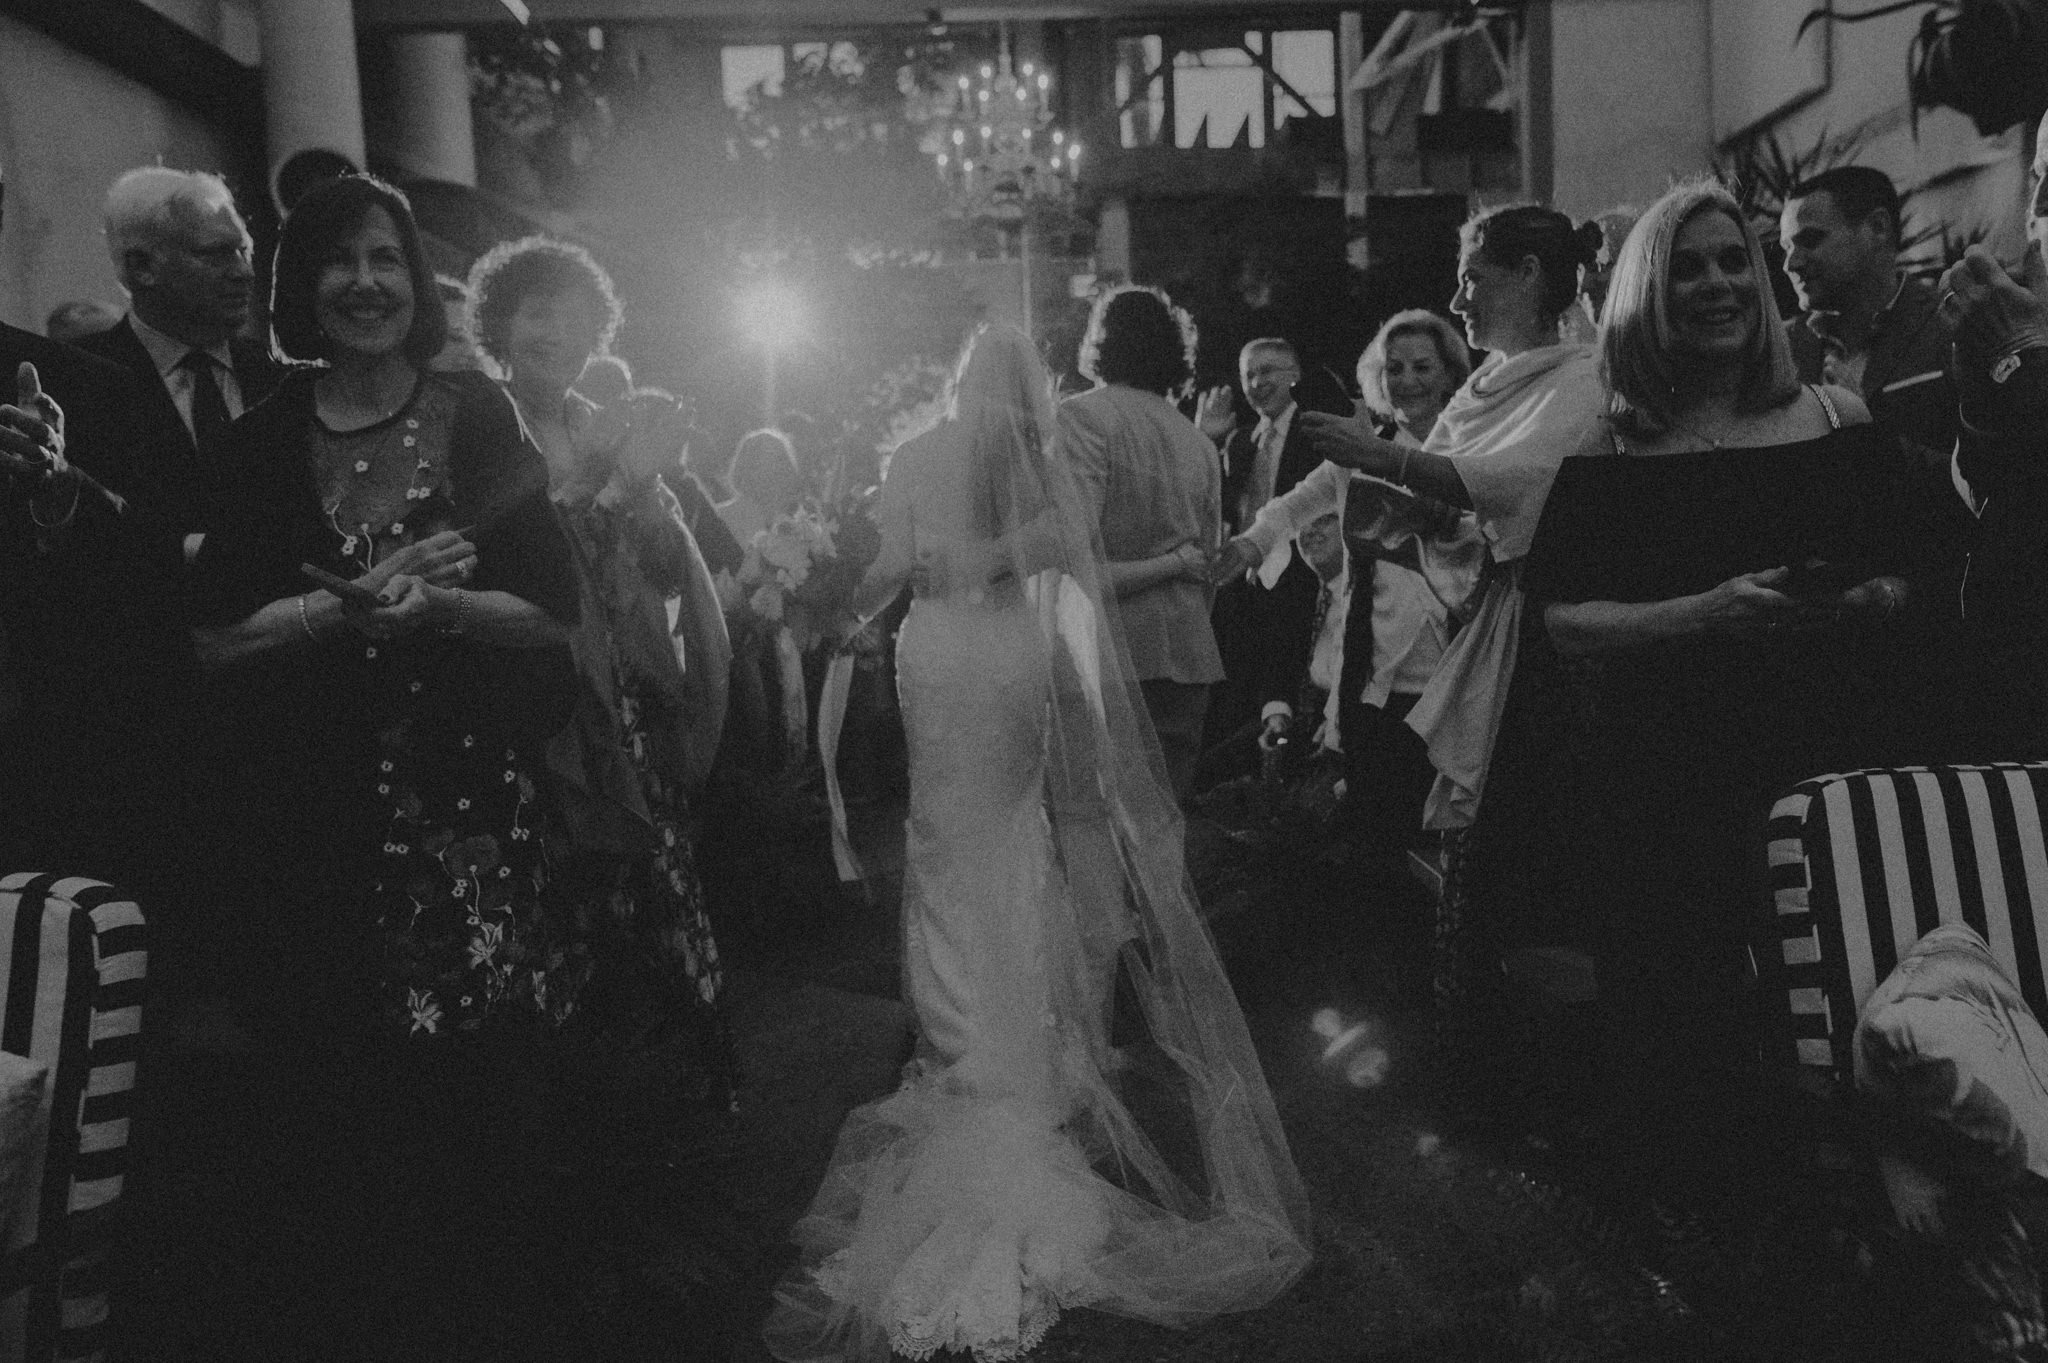 valentine dtla wedding venue los angeles - queer wedding photographers - itlaphoto.com-102.jpg